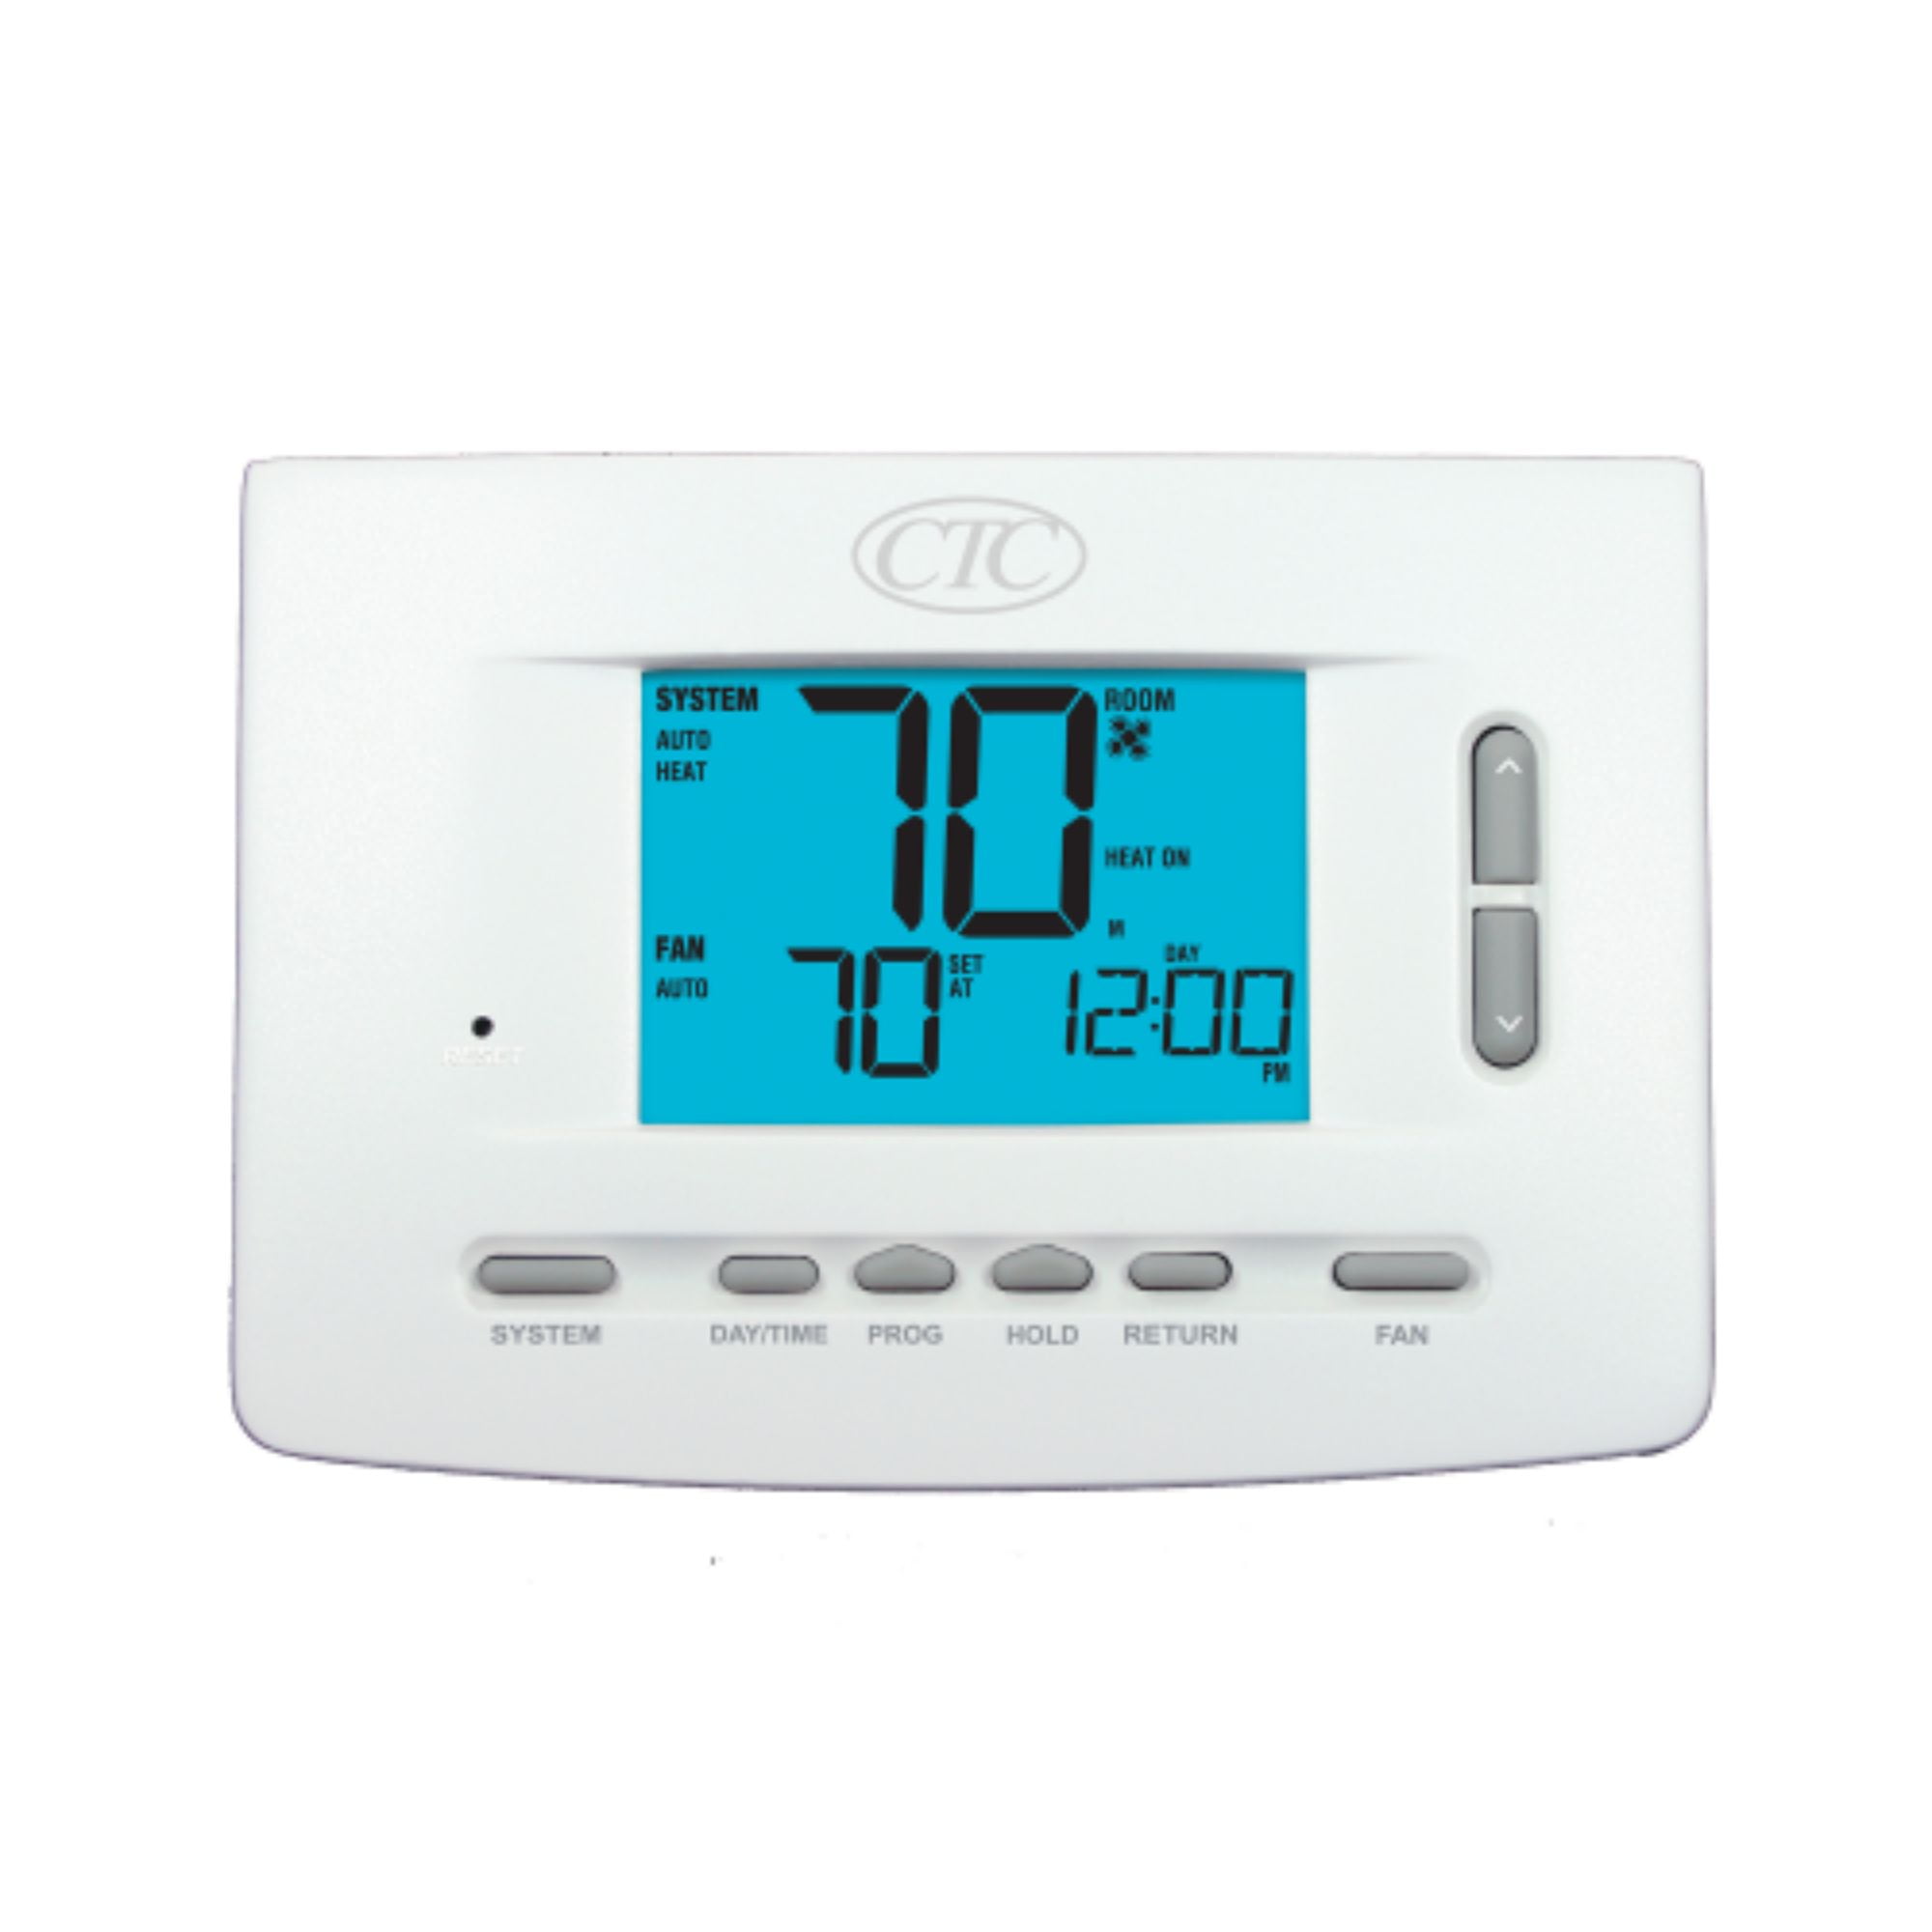 73257p-genuine-oem-ctc-wall-thermostat-walmart